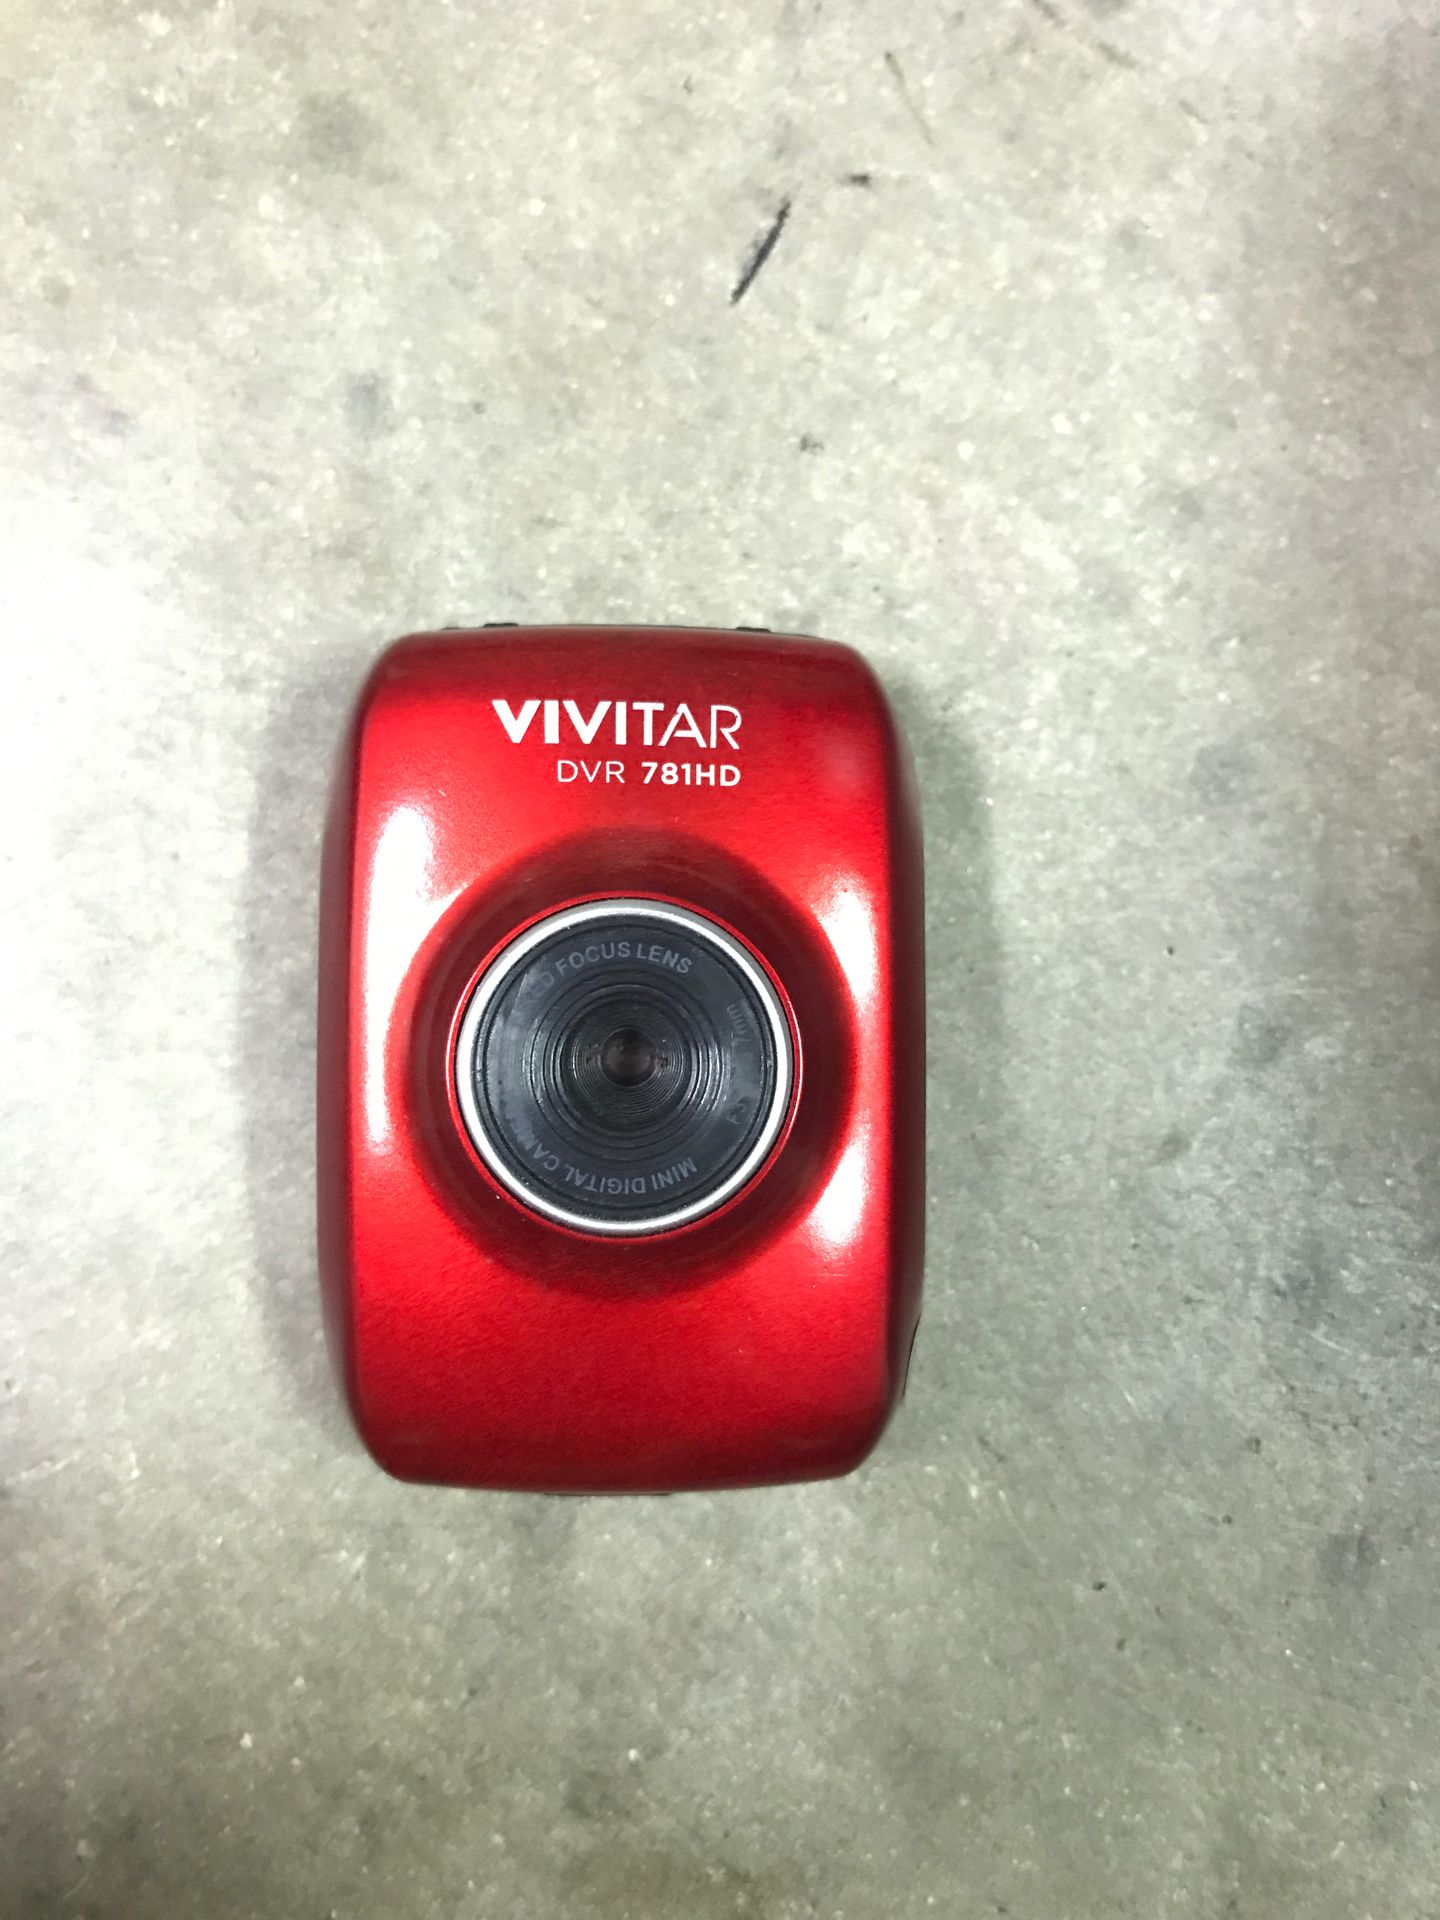 New Vivitar waterproof camera